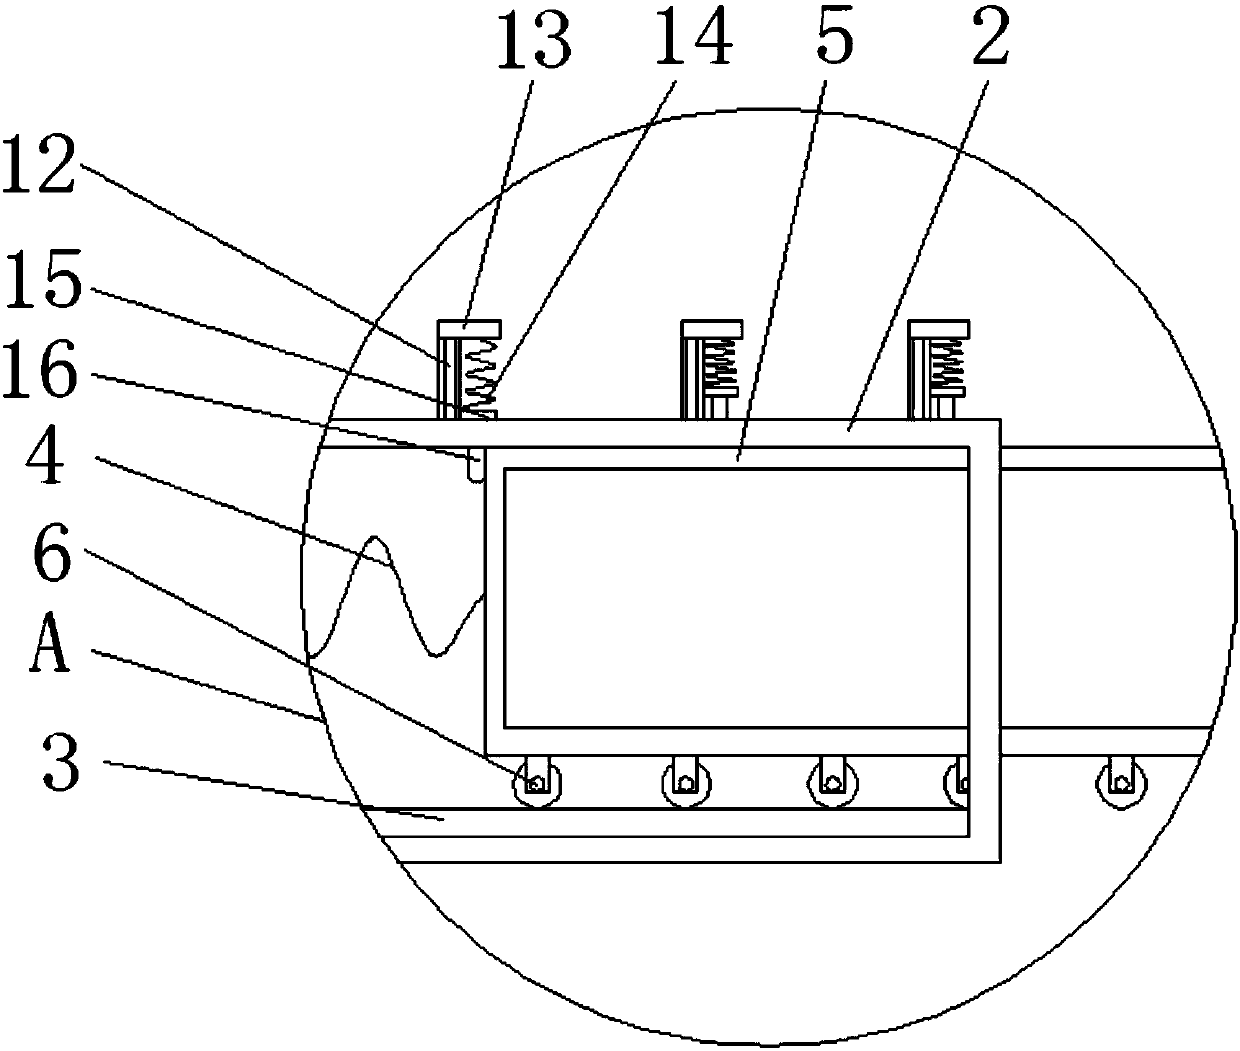 Three-roller grinder capable of adjusting drum distance